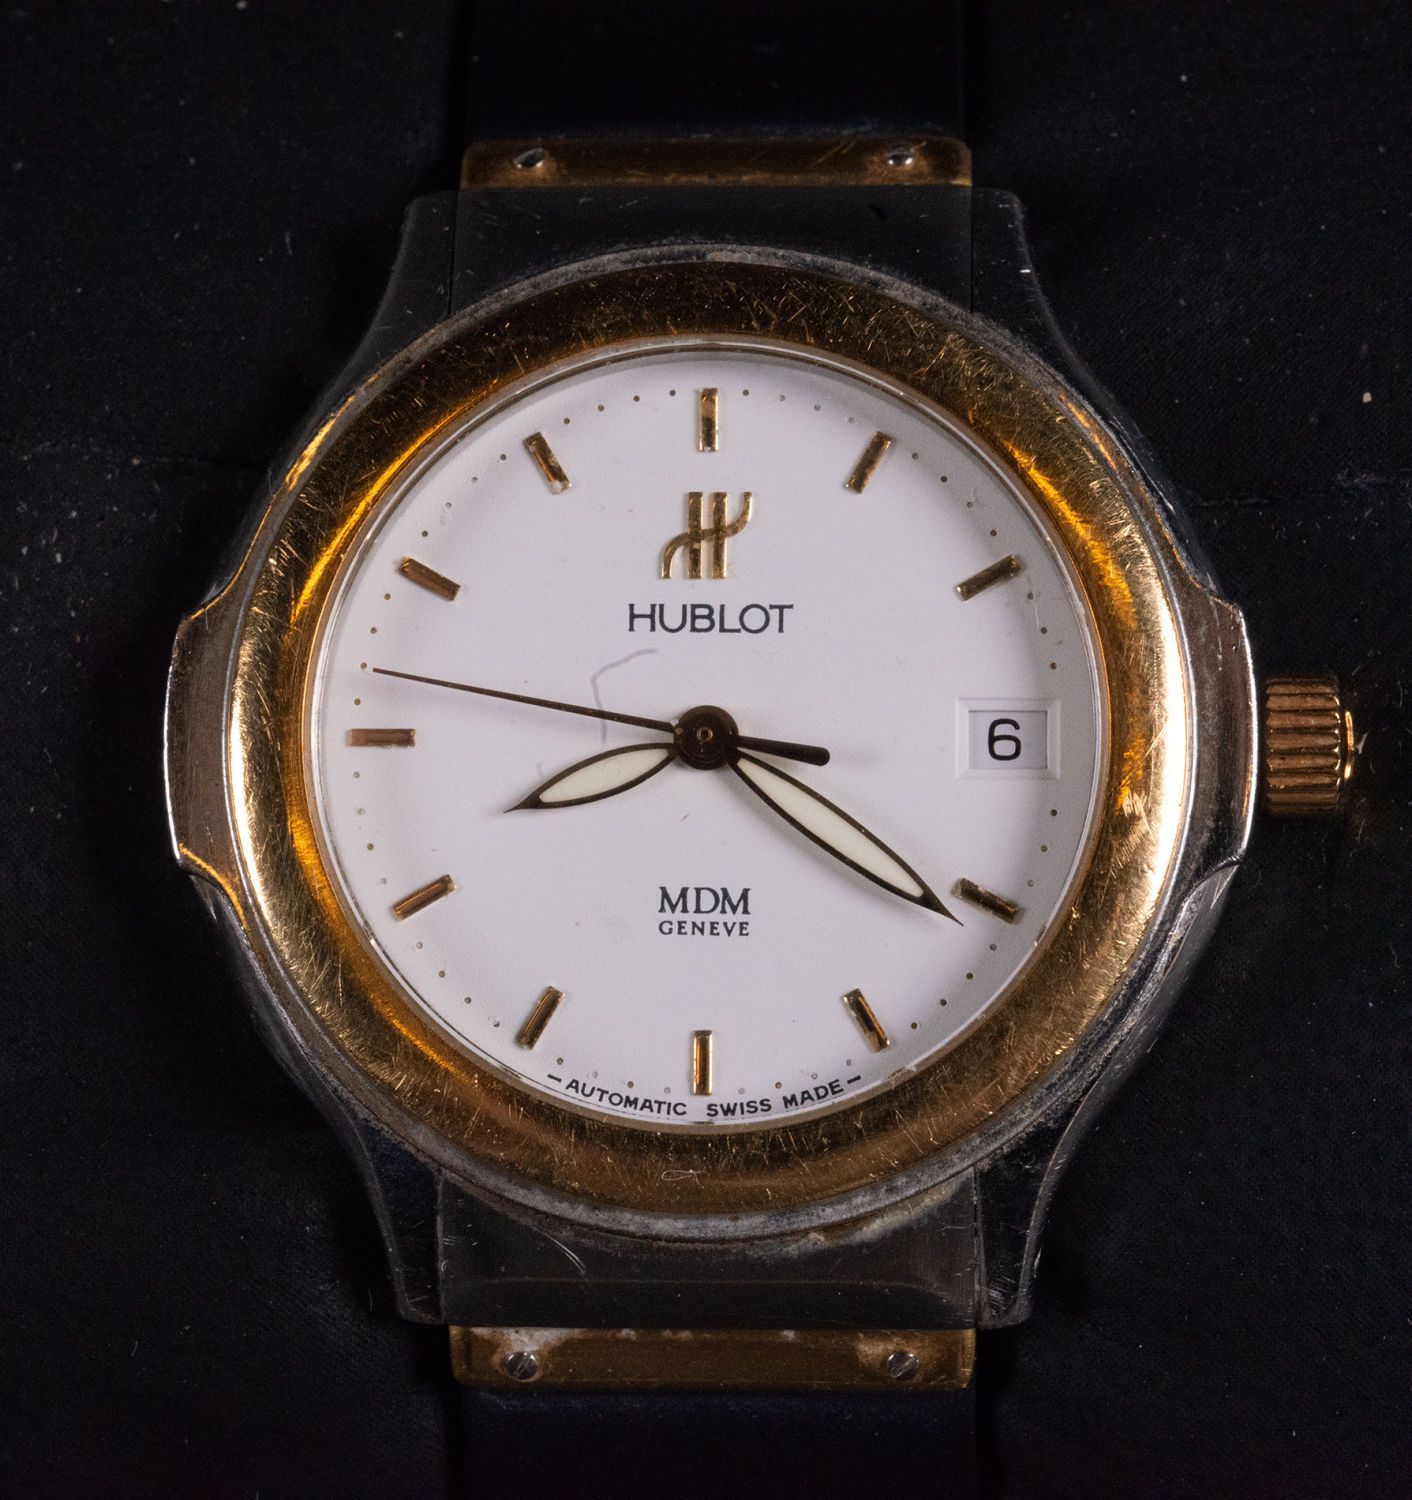 Hublot MDM titanium and gold men's watch Reloj Hublot MDM Geneve. Modelo para se&hellip;